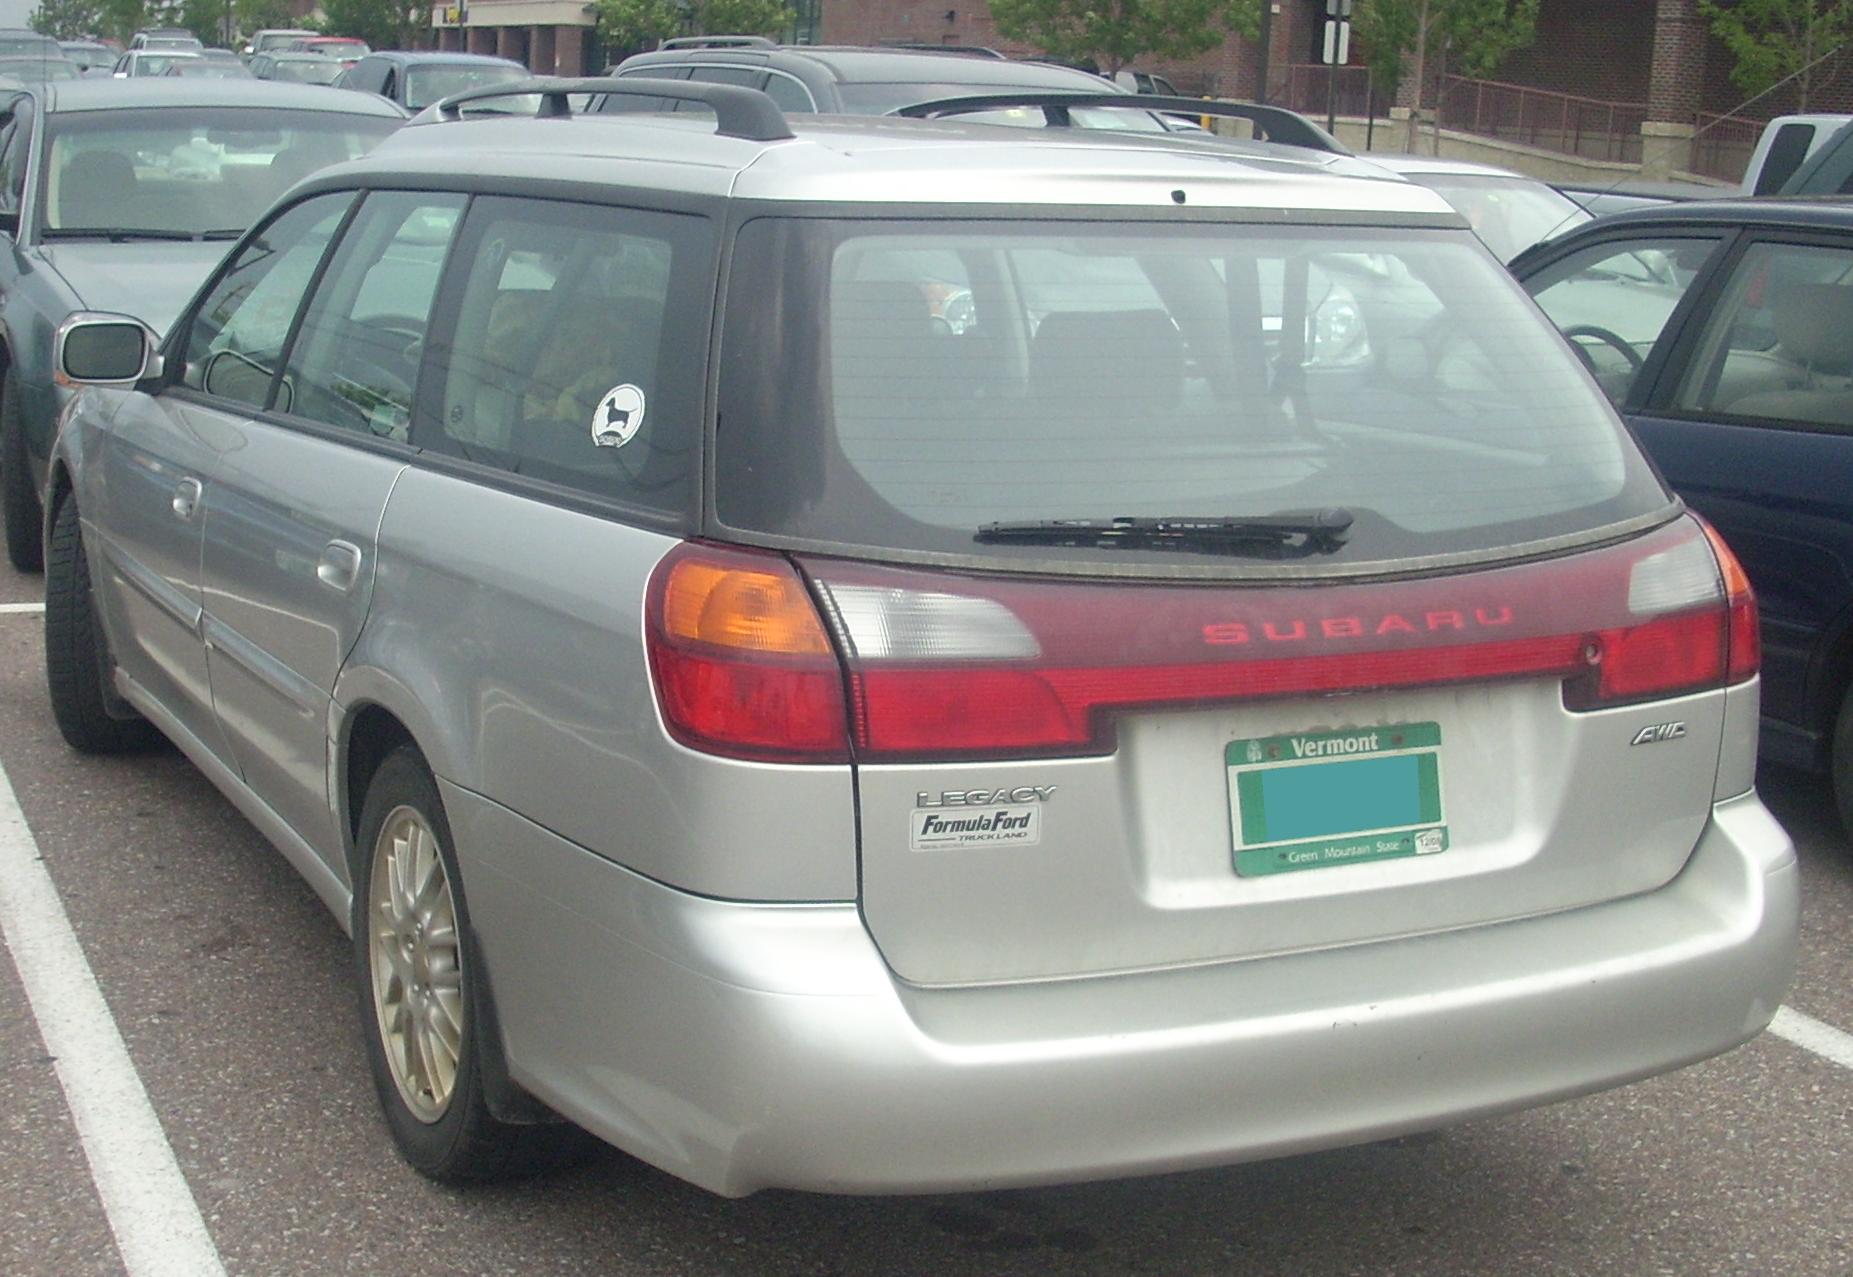 Subaru legacy 2003. Субару Легаси 2003 вагон. Субару Легаси вагон 2004. Субару Легаси 2003 универсал.